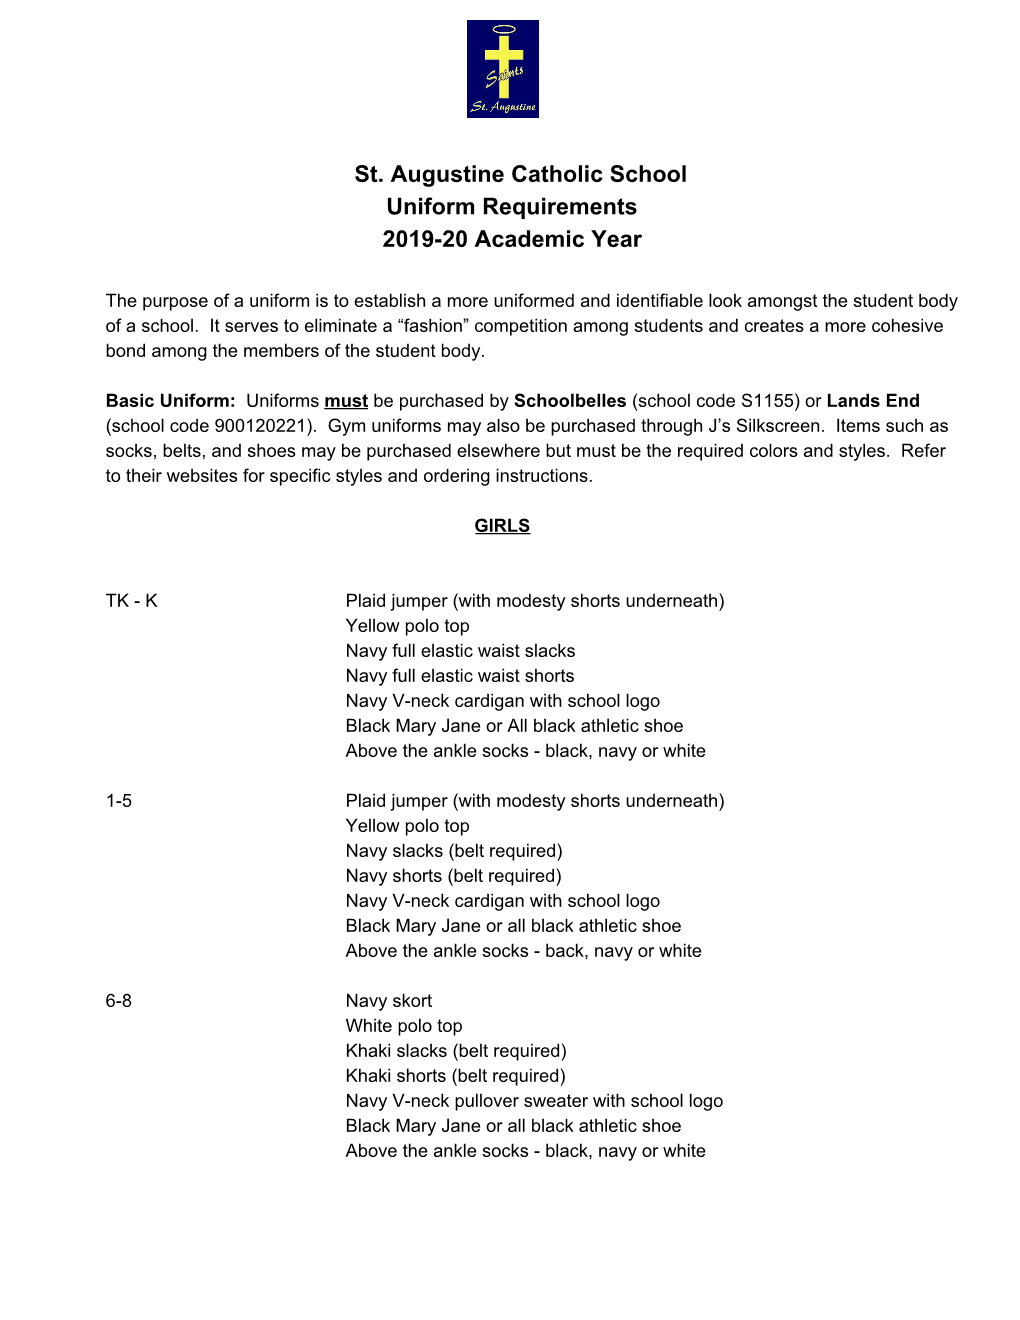 St. Augustine Catholic School Uniform Requirements 2019-20 Academic Year